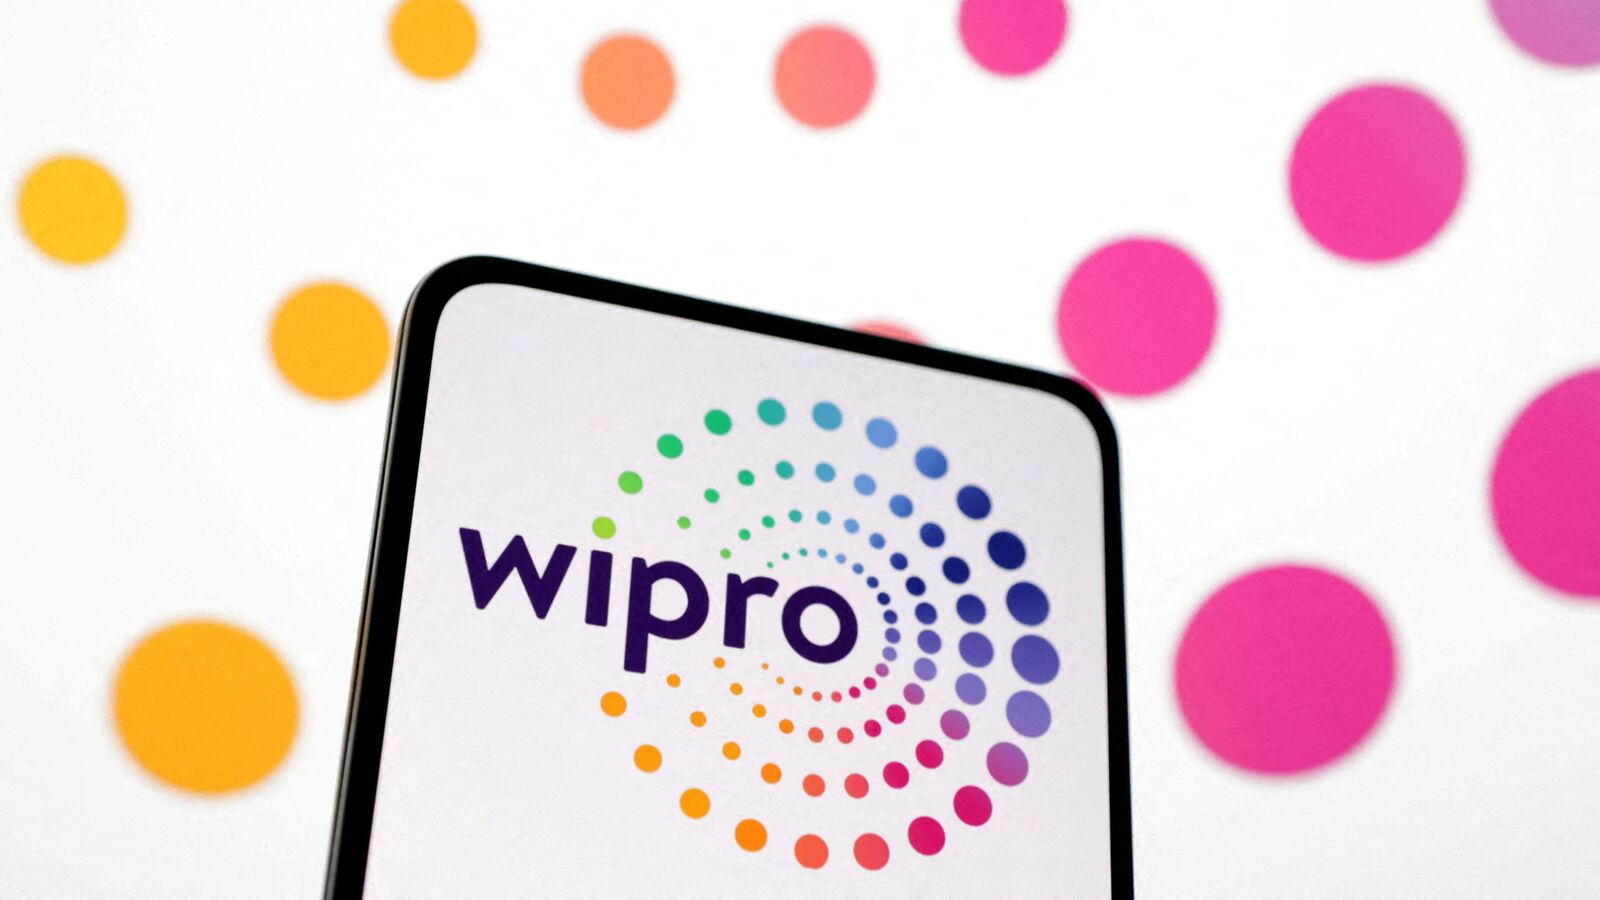 Wipro's stock price rose 121% during Thierry Delaporte's tenure, revenue up 53.5% in last 14 quarters